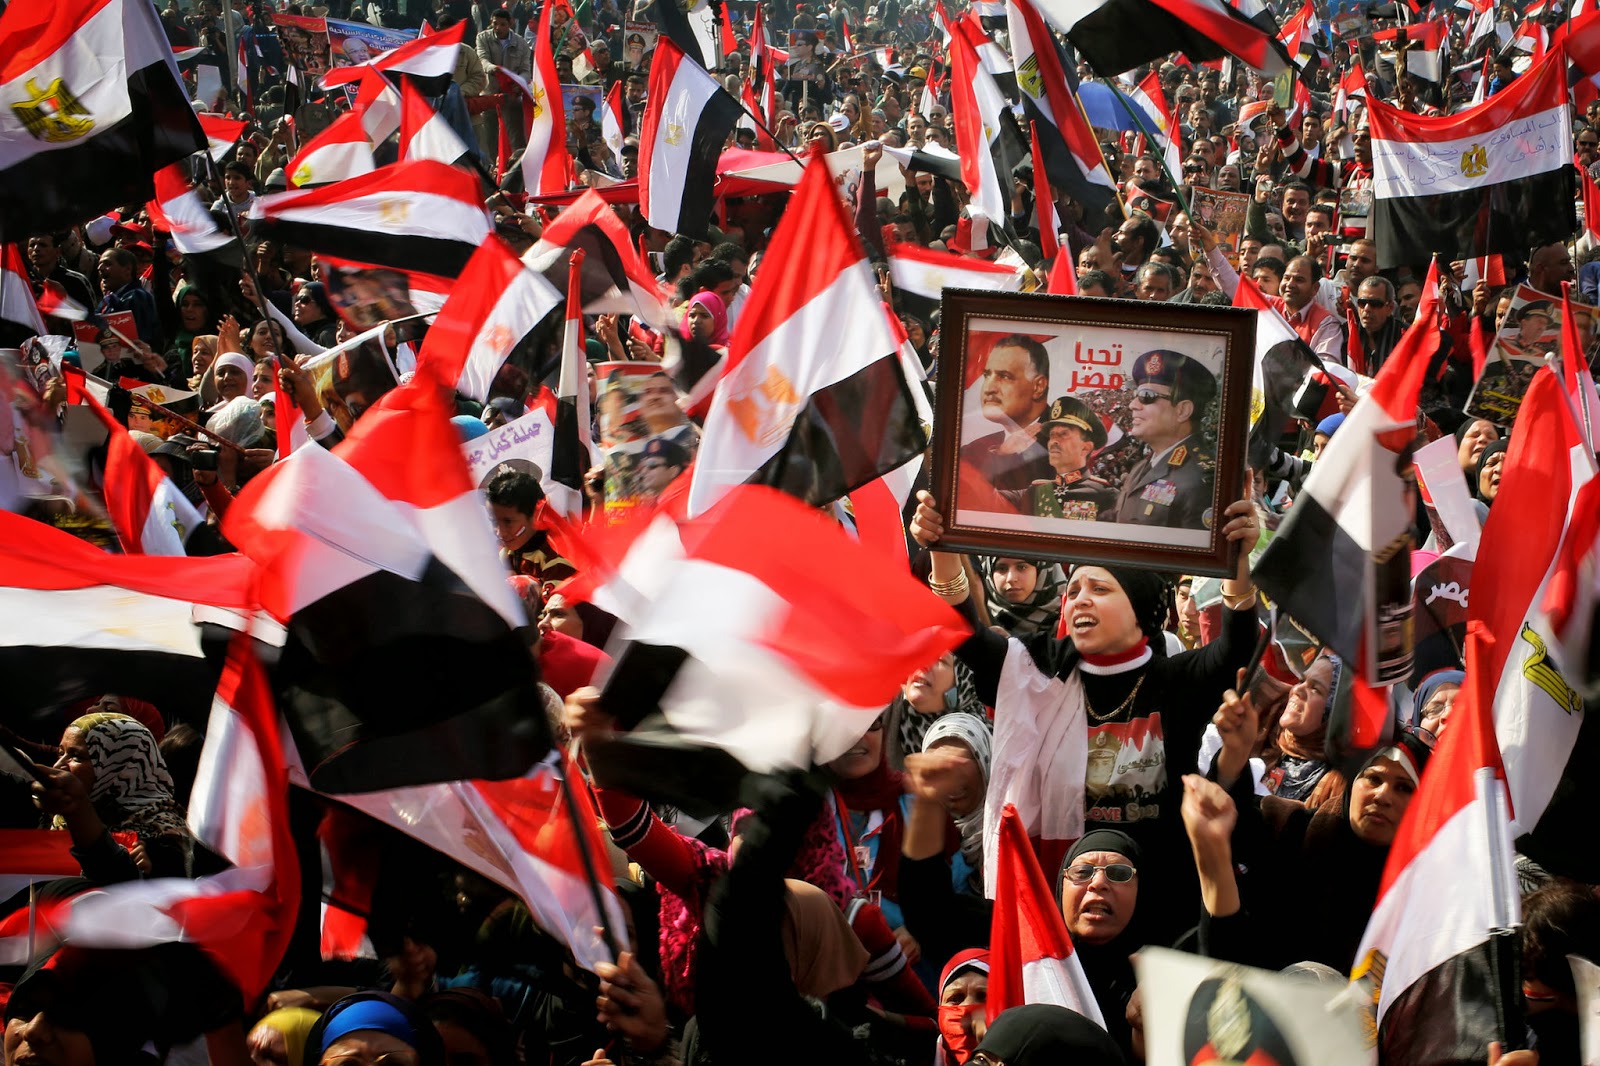 Sisi mania has swept Egypt since the ouster of Islamist President Mohammed Morsi  [Credit: Tara Todras-Whitehill for the New York Times]